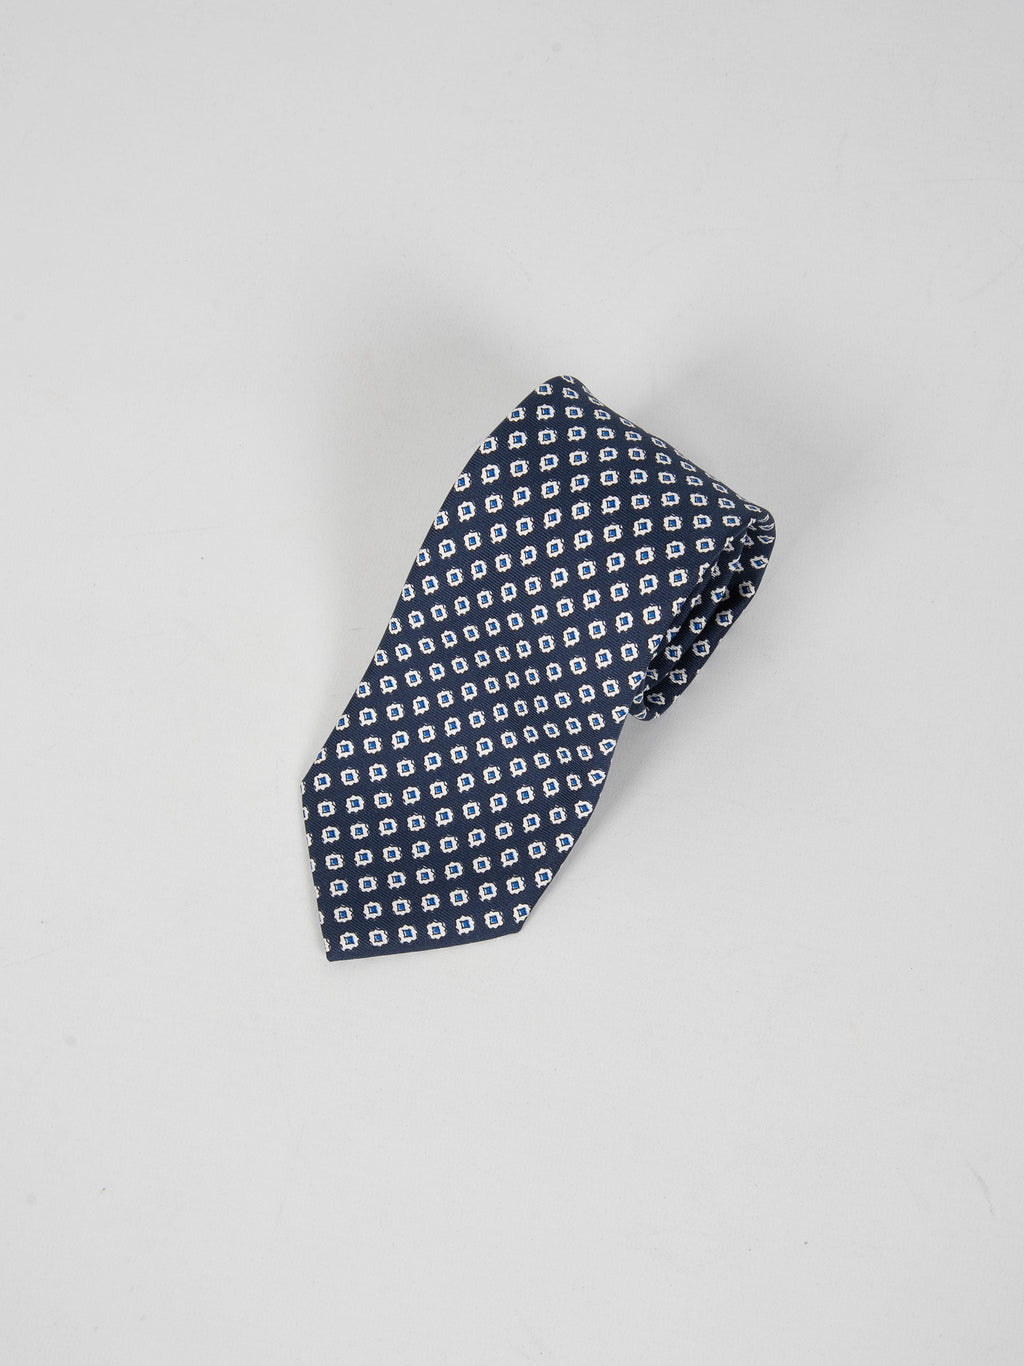 Cravatta Seta Micro Rombi - Blu